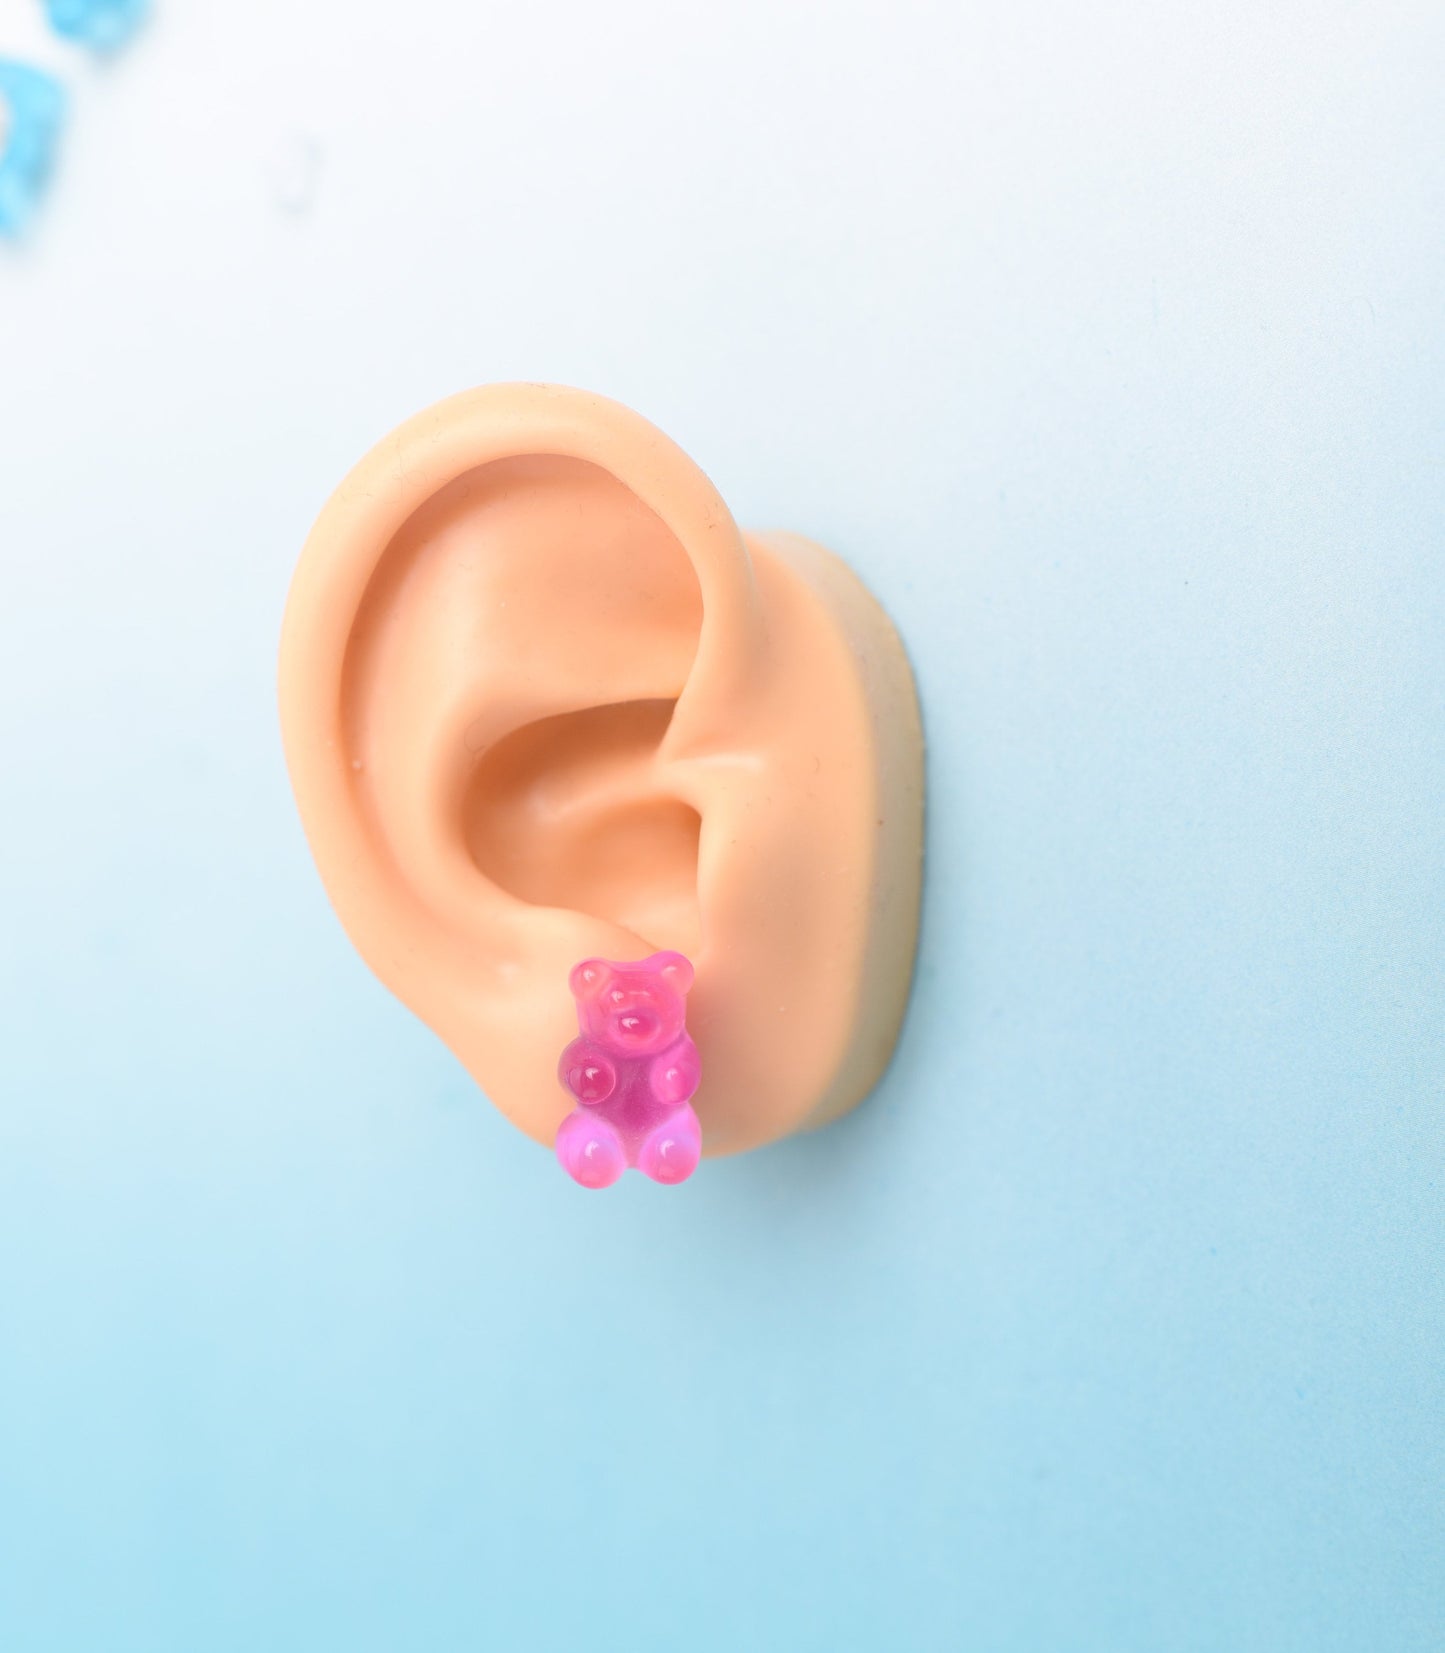 Blue, Purple, & Pink Gummy Bear Earring (Medium Size) Trio with Titanium Posts